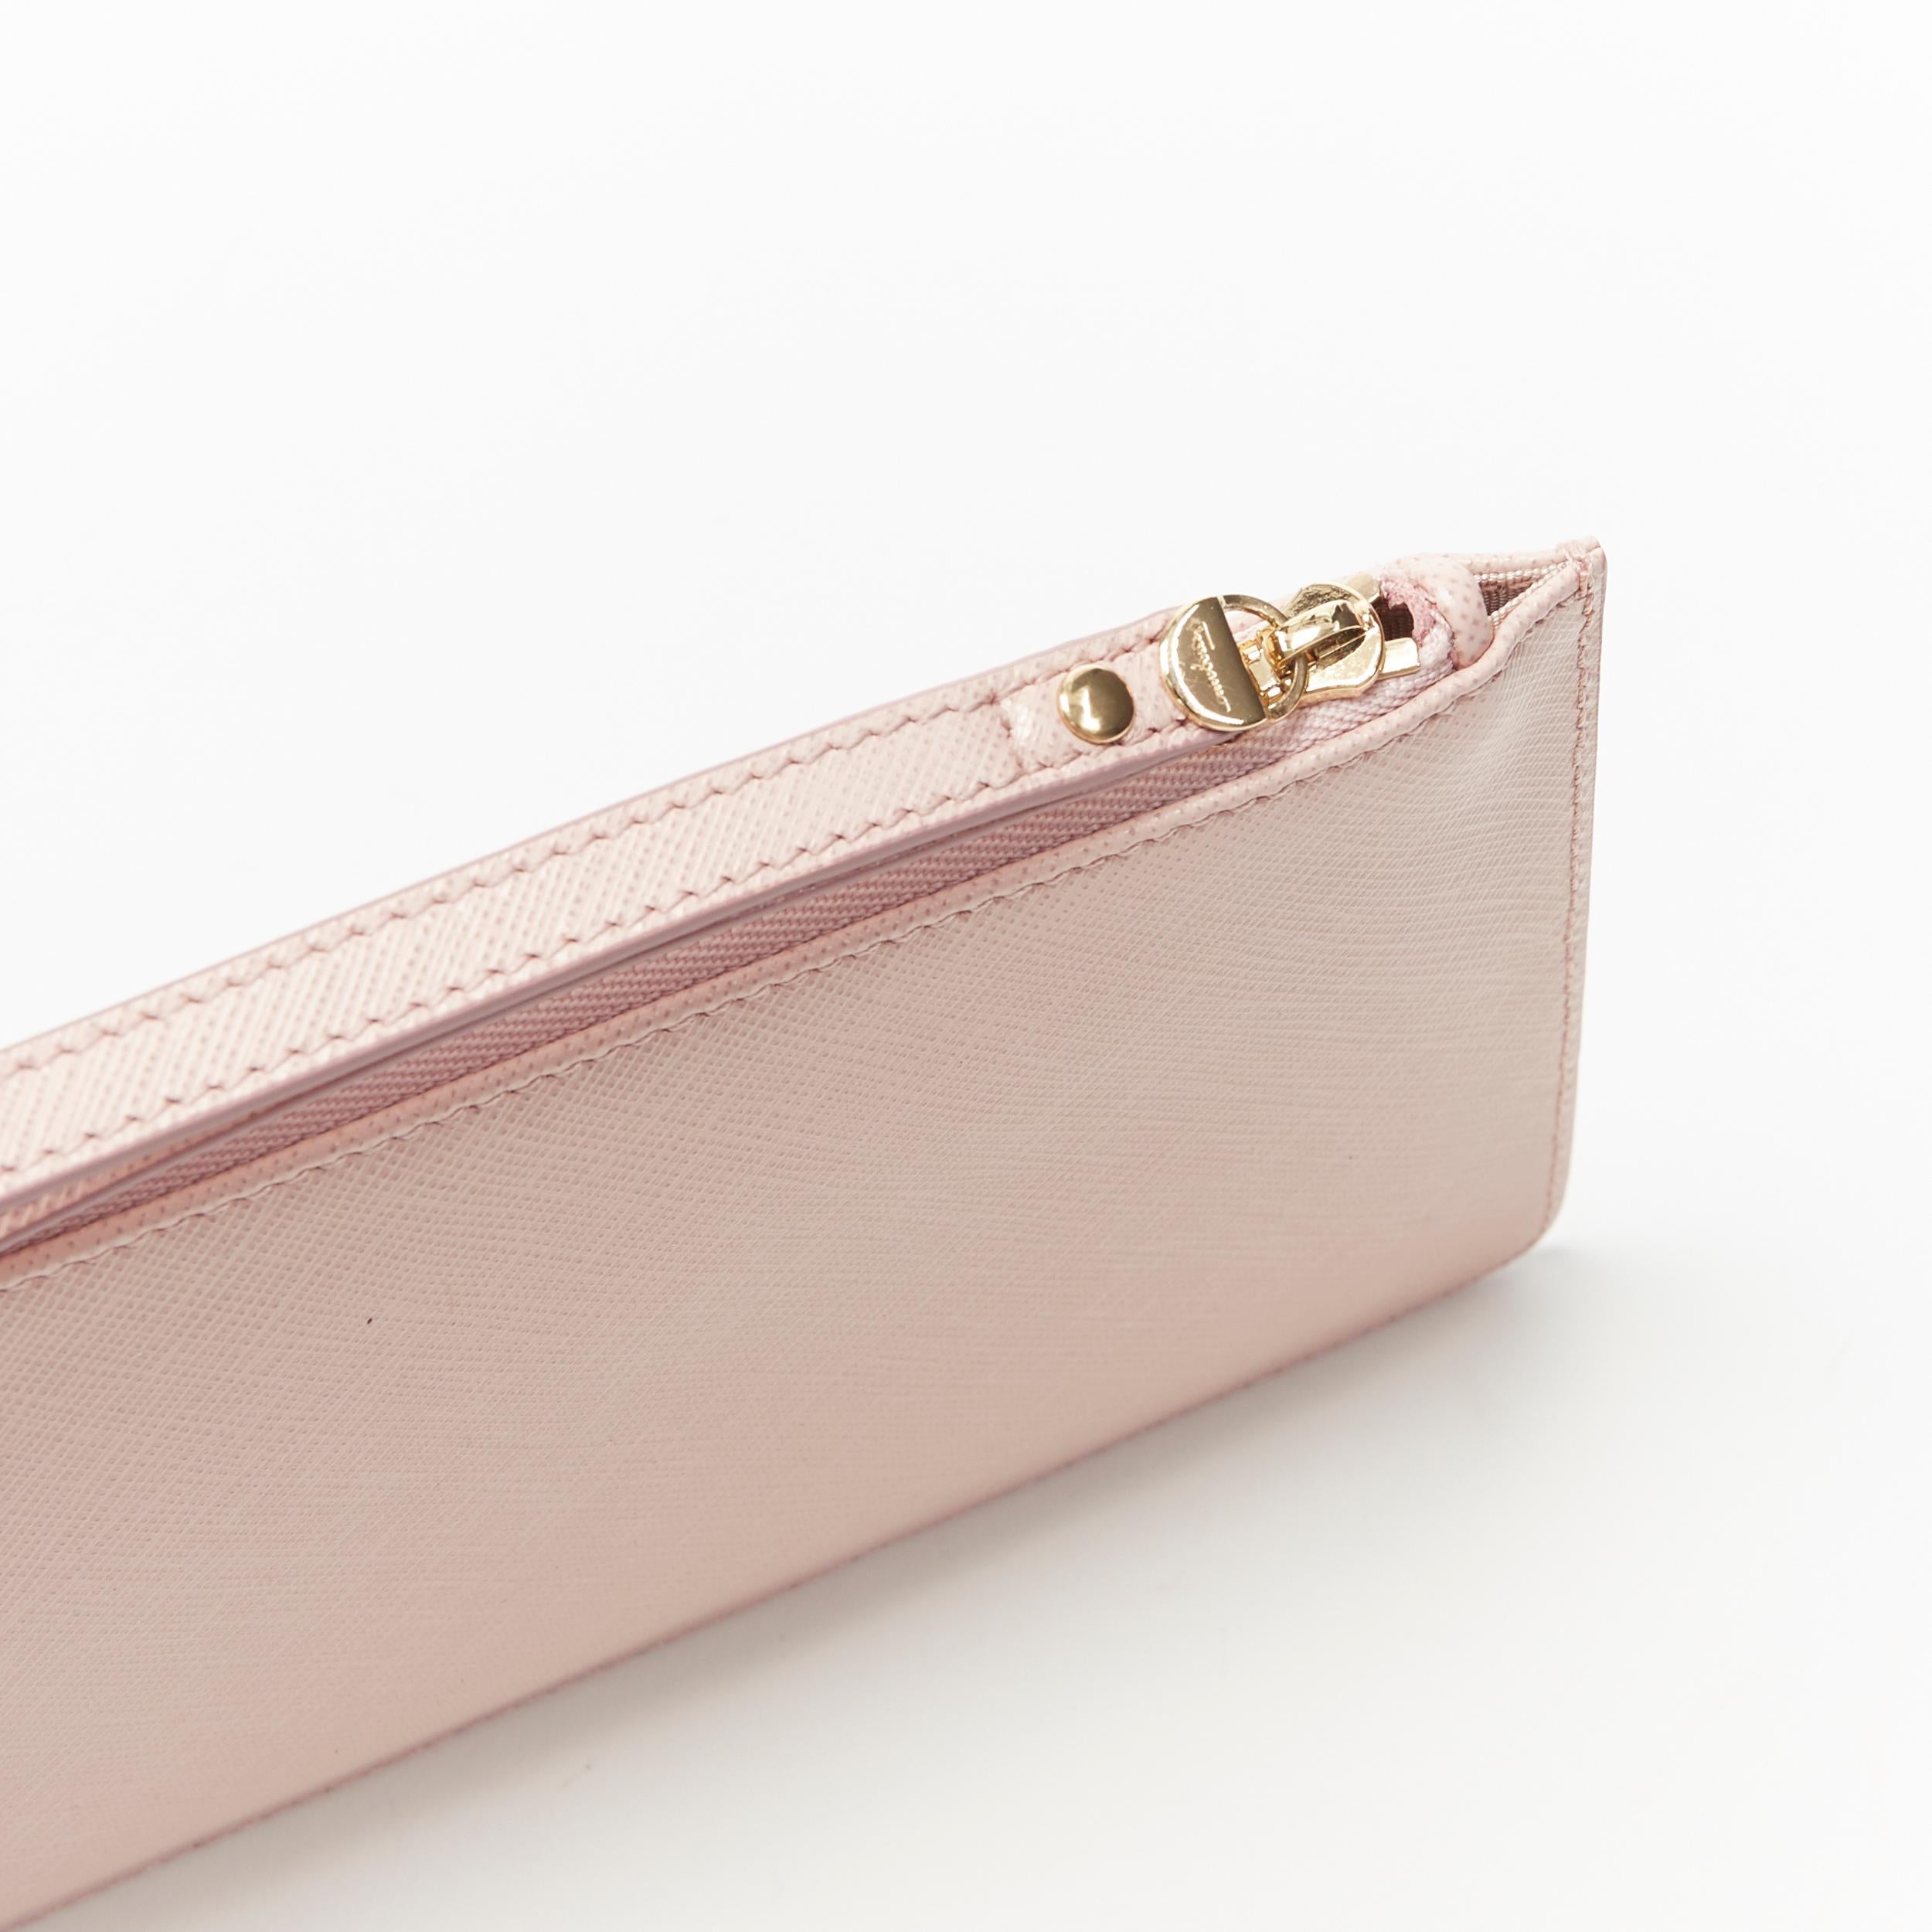 Beige new SALVATORE FERRAGAMO blush pink gold logo top zip wristlet pouch clutch bag